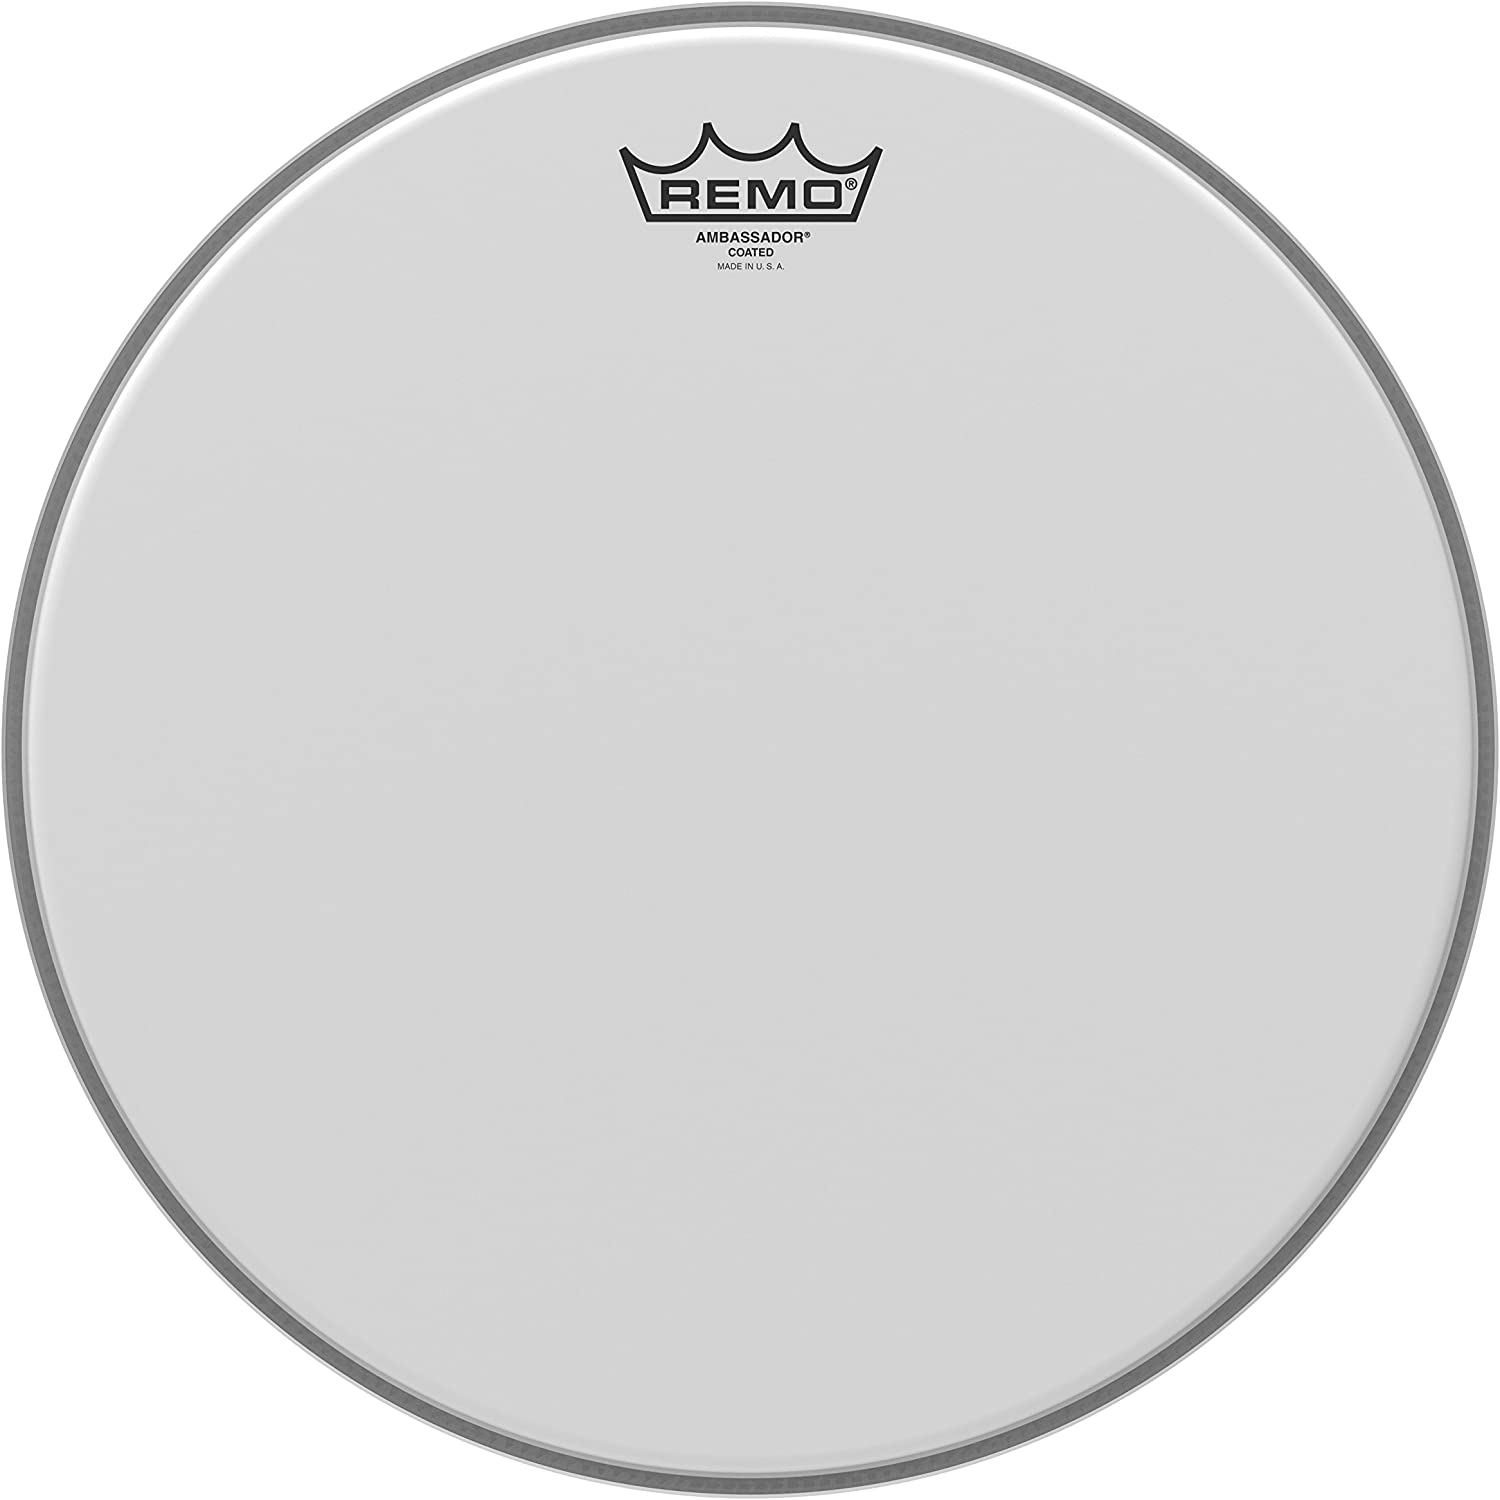 Remo Ambassador Coated Drum Head - 14 Inch, R/BA011400